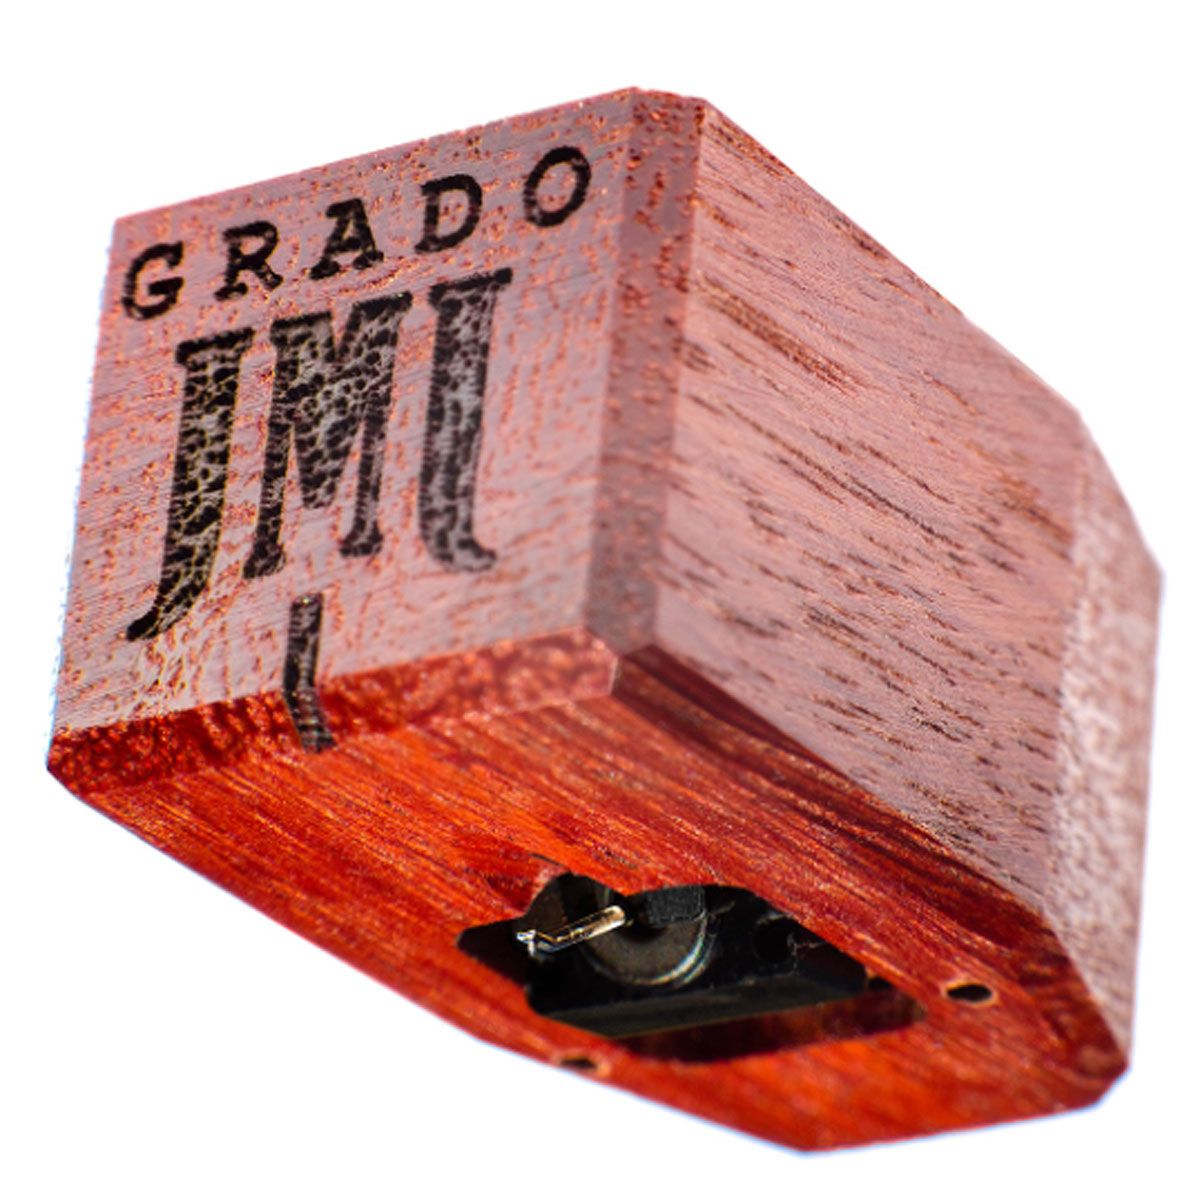 Grado Master3 Phono Cartridge - Low Output, front view